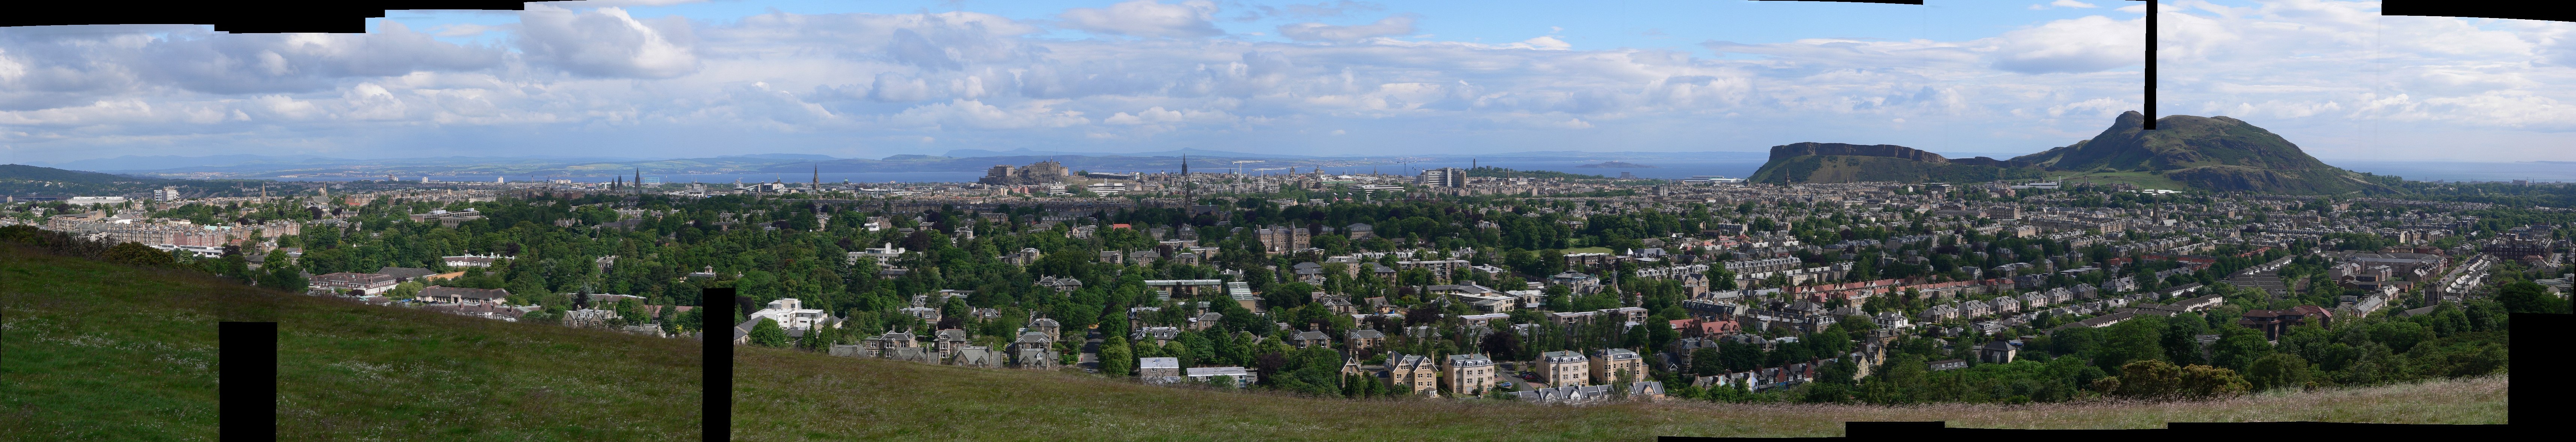 Edinburgh City Panorama - Zoomed in.JPG